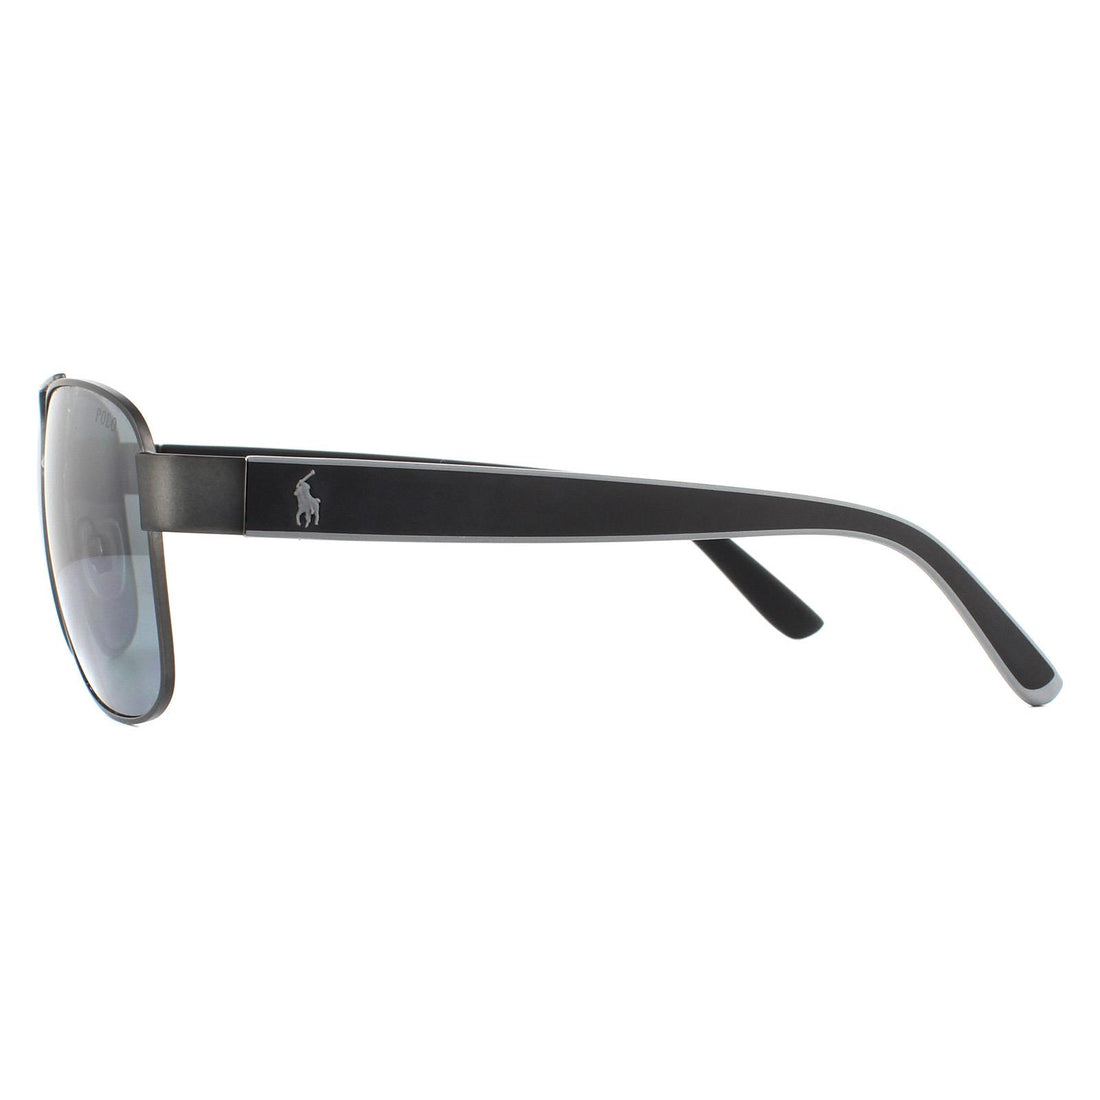 Polo Ralph Lauren Sunglasses PH3122 91576G Matte Dark Gunmetal Light Grey Mirror